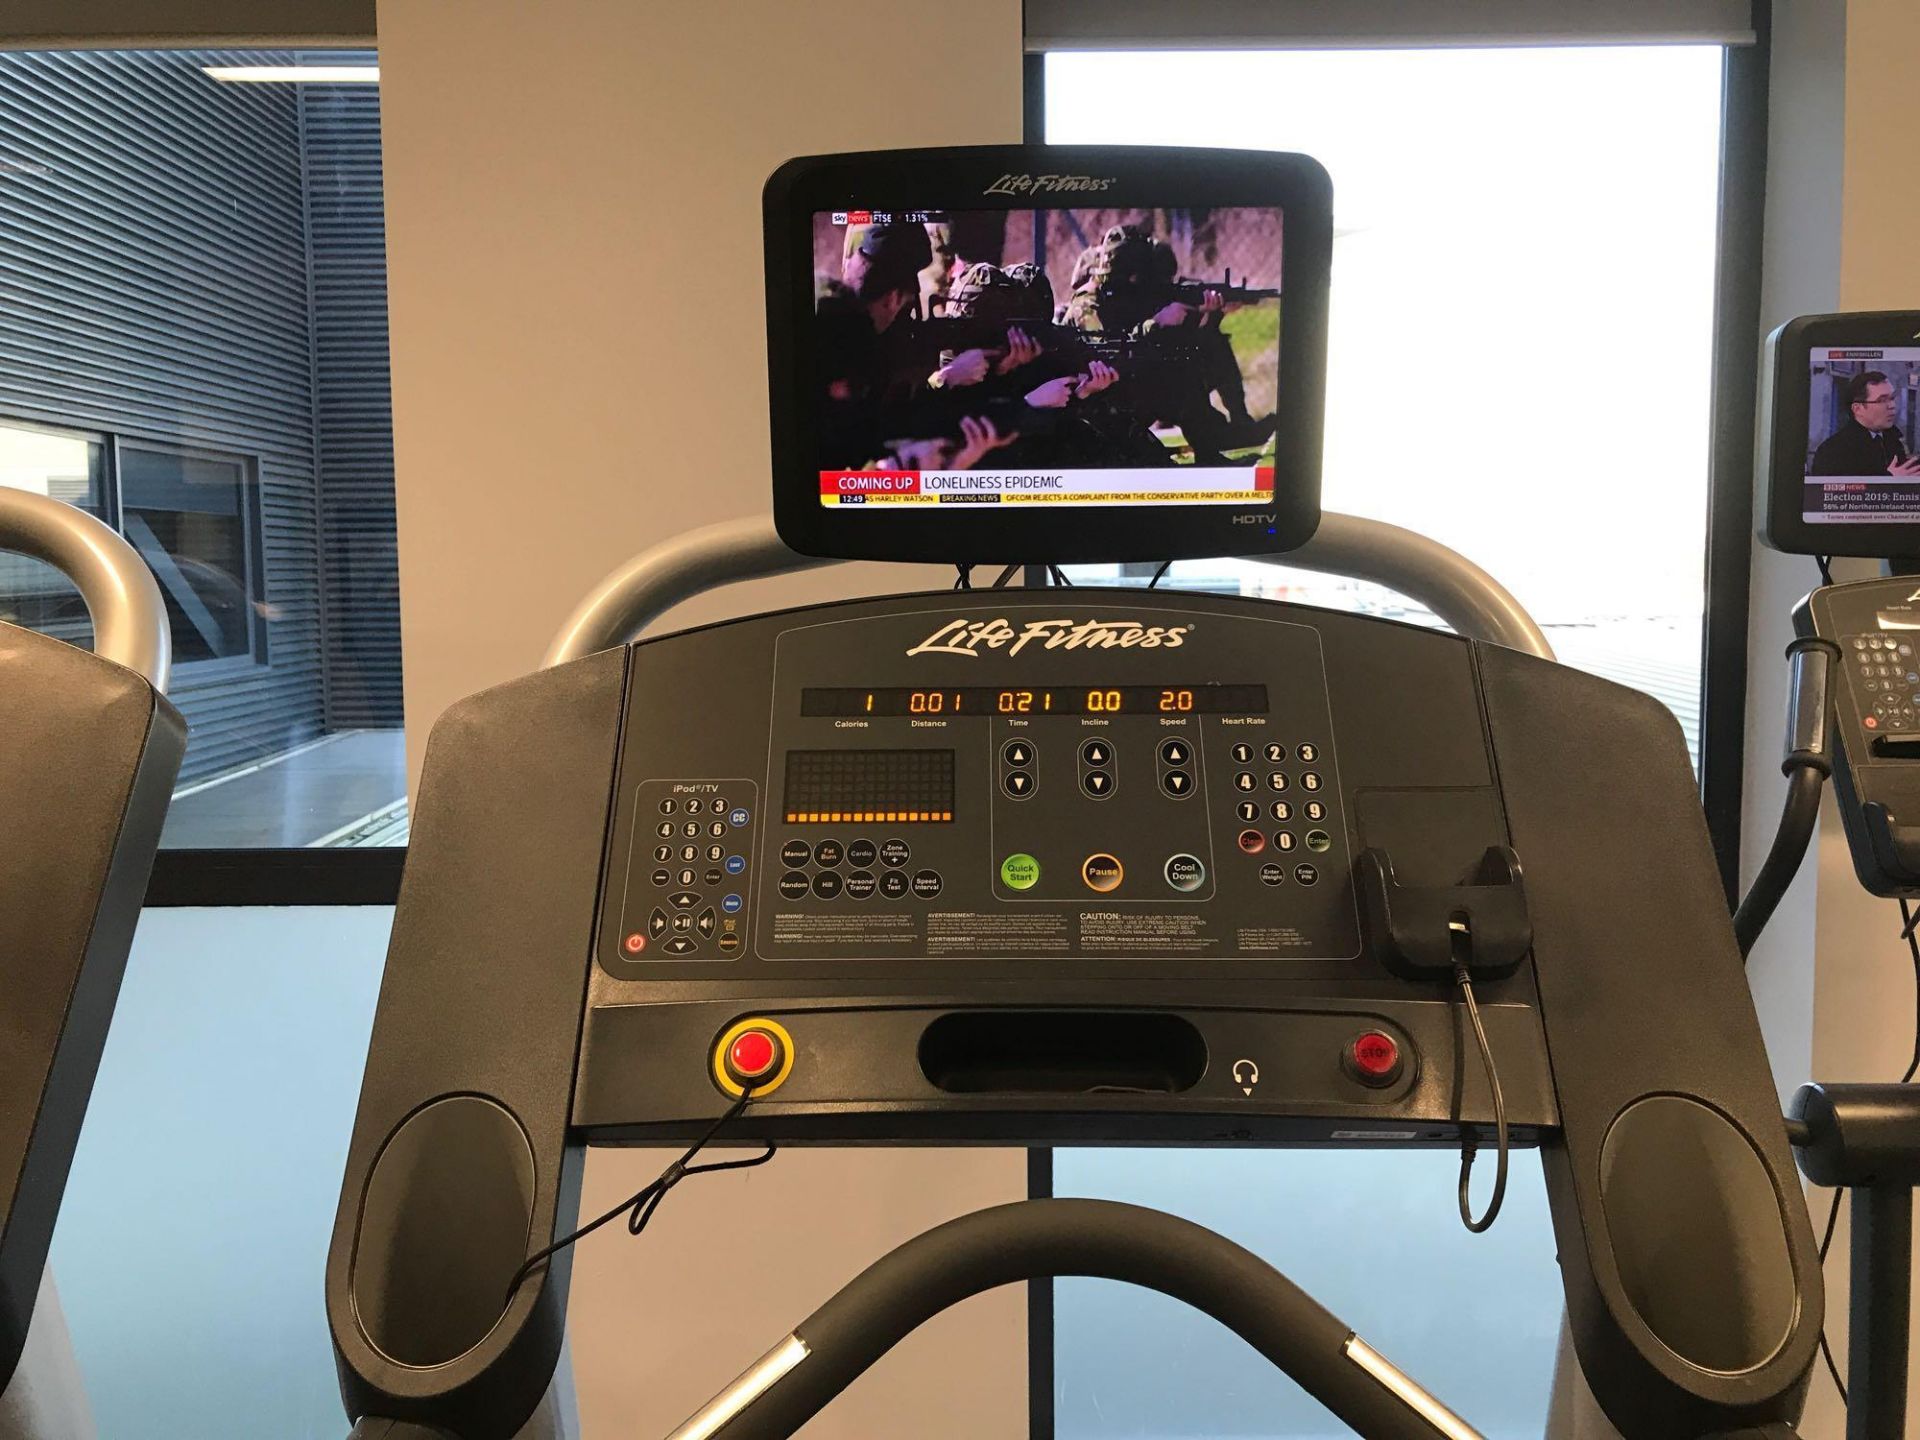 x1 Life fitness flex deck treadmill - Image 3 of 4